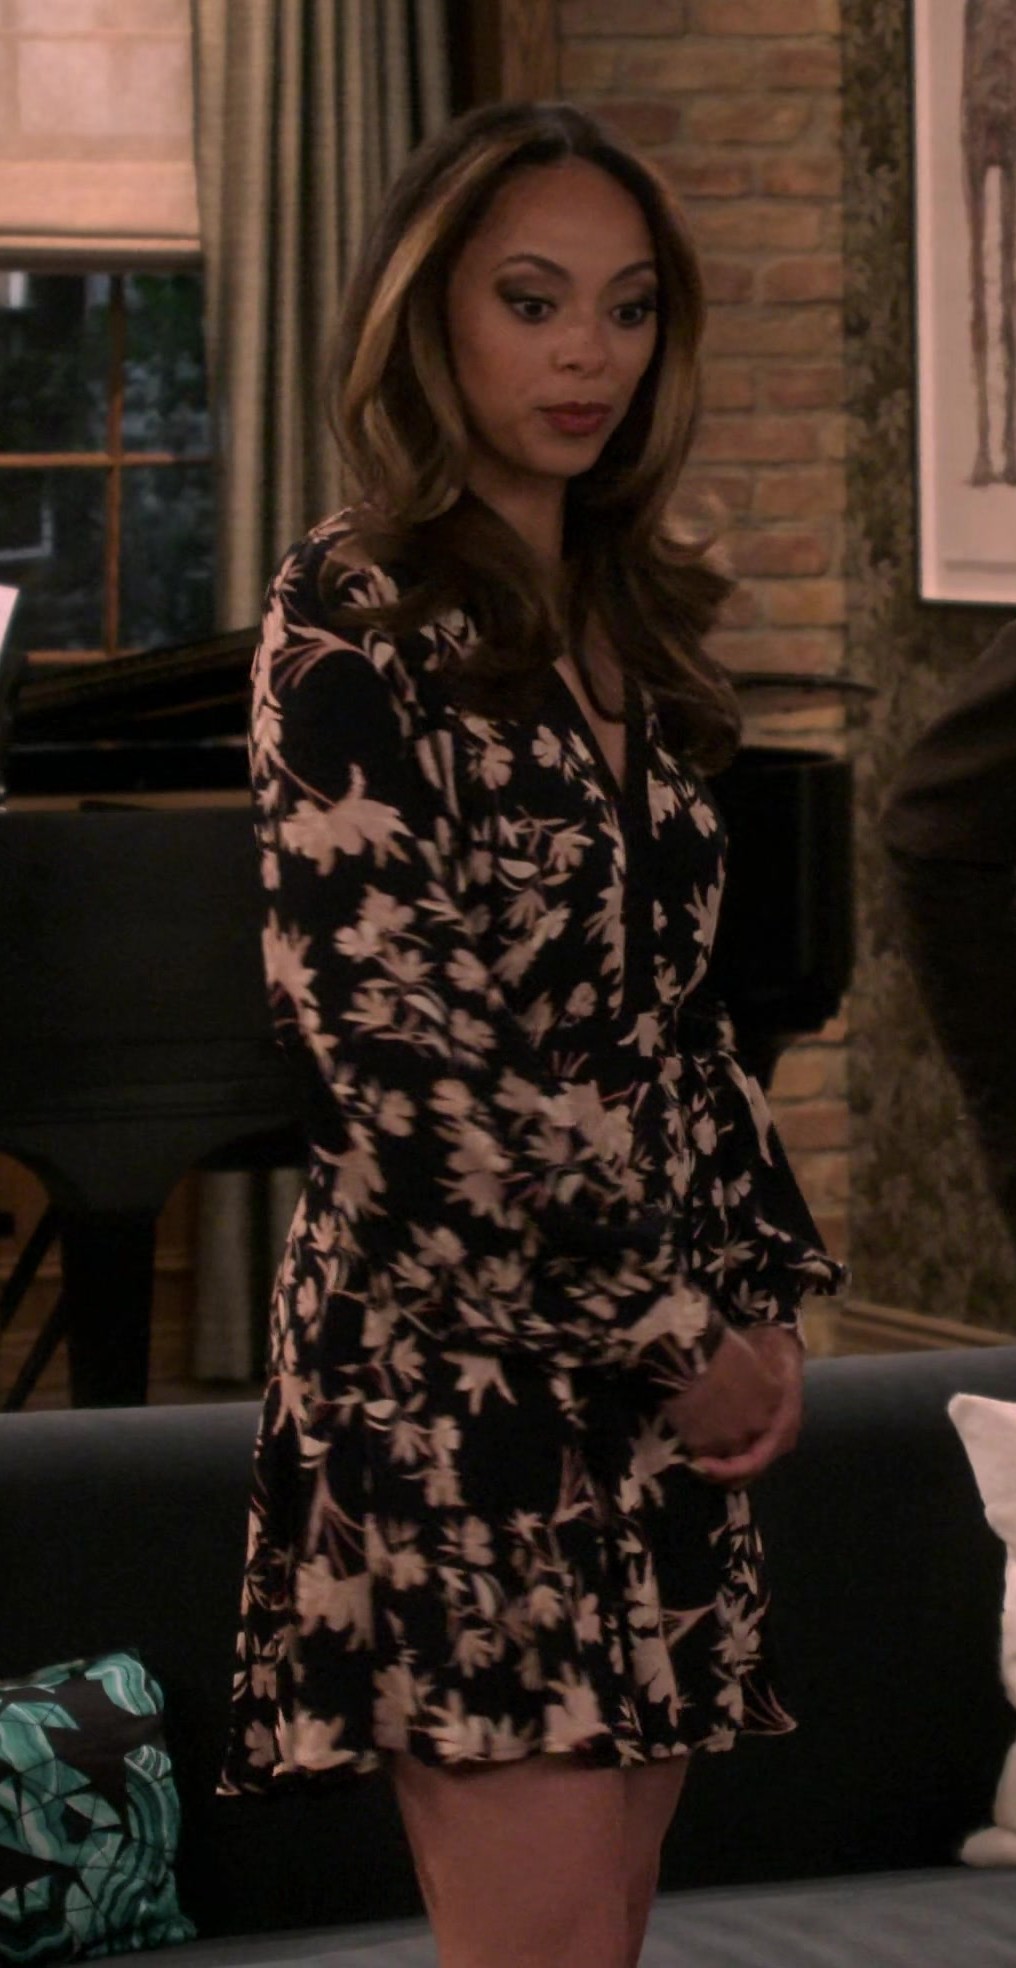 Worn on Frasier TV Show - Floral Print Black Long Sleeve Mini Dress Worn by Amber Stevens West as Nicole